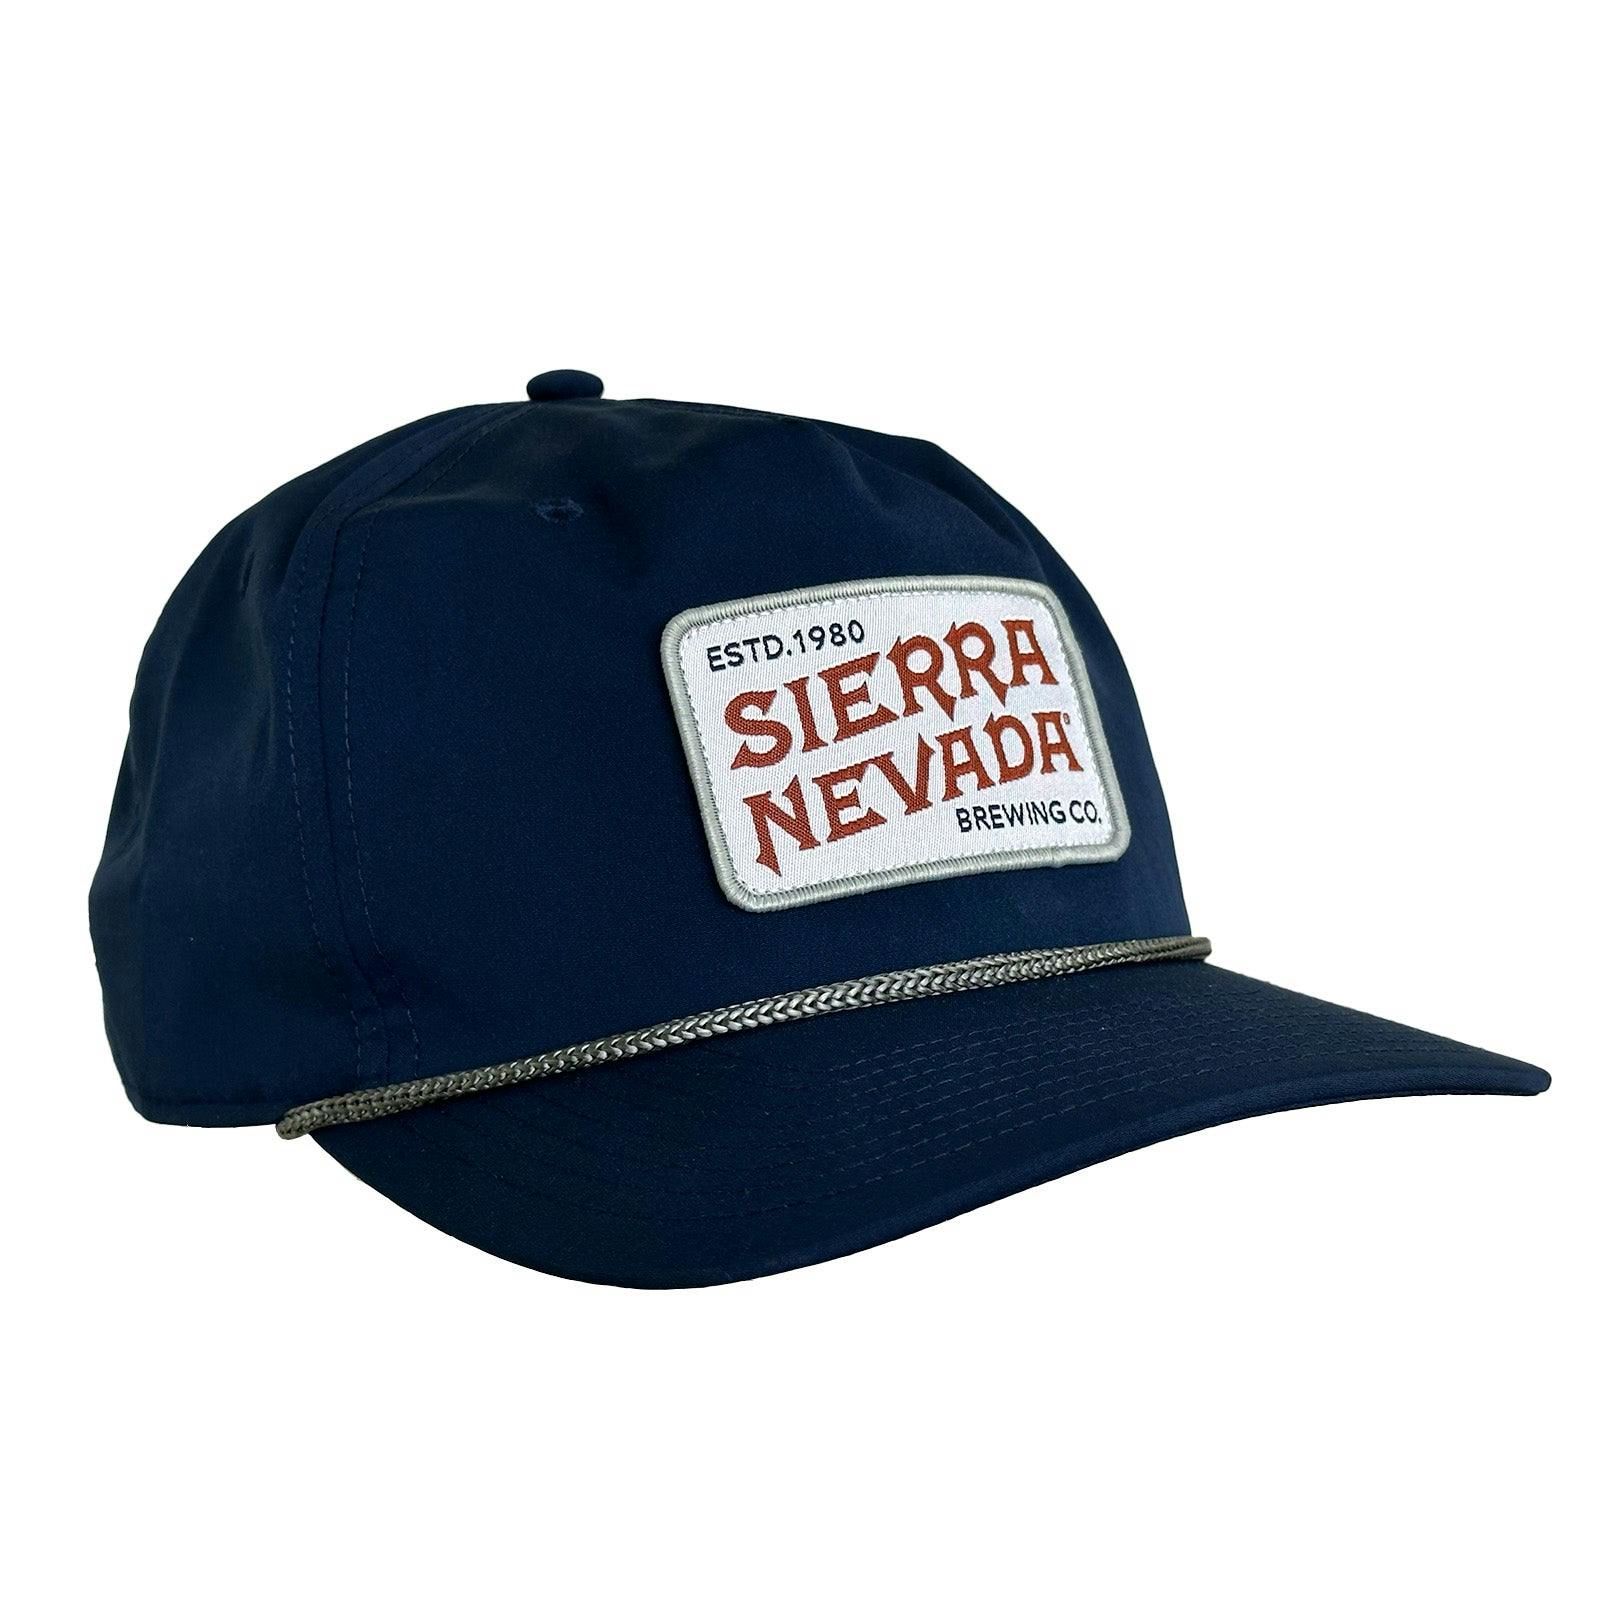 Sierra Nevada Brewing Co. Est. 1980 Golfer Hat in navy - front view